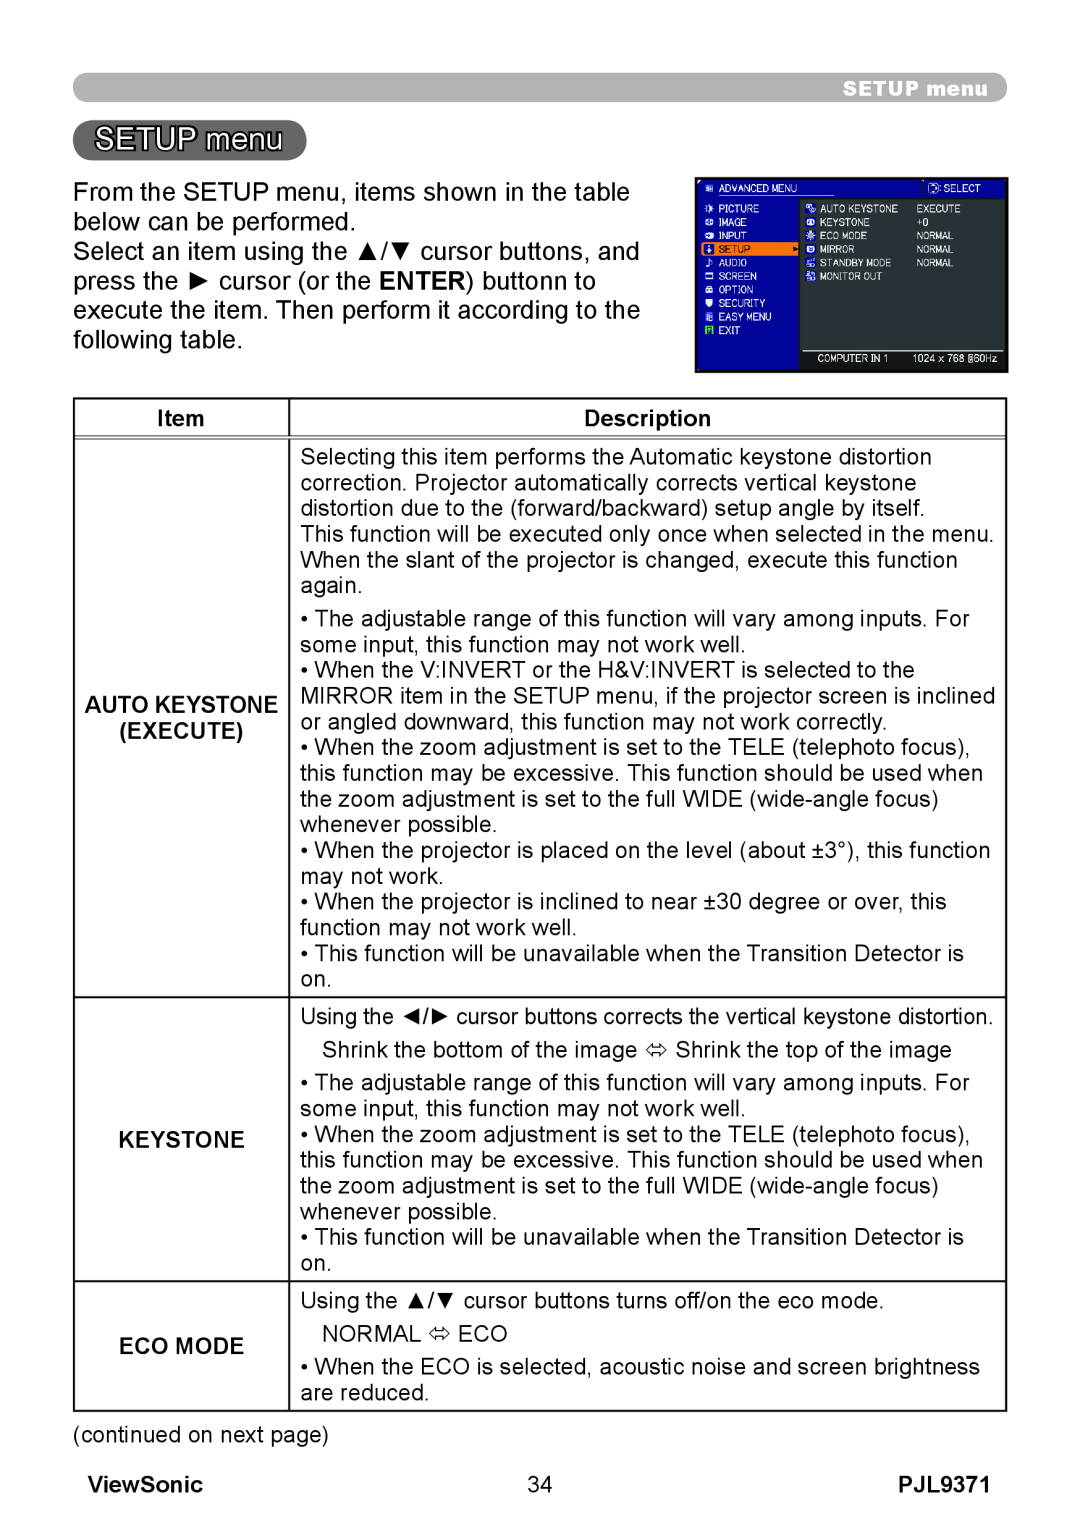 ViewSonic pjl9371 manual SETUP menu 